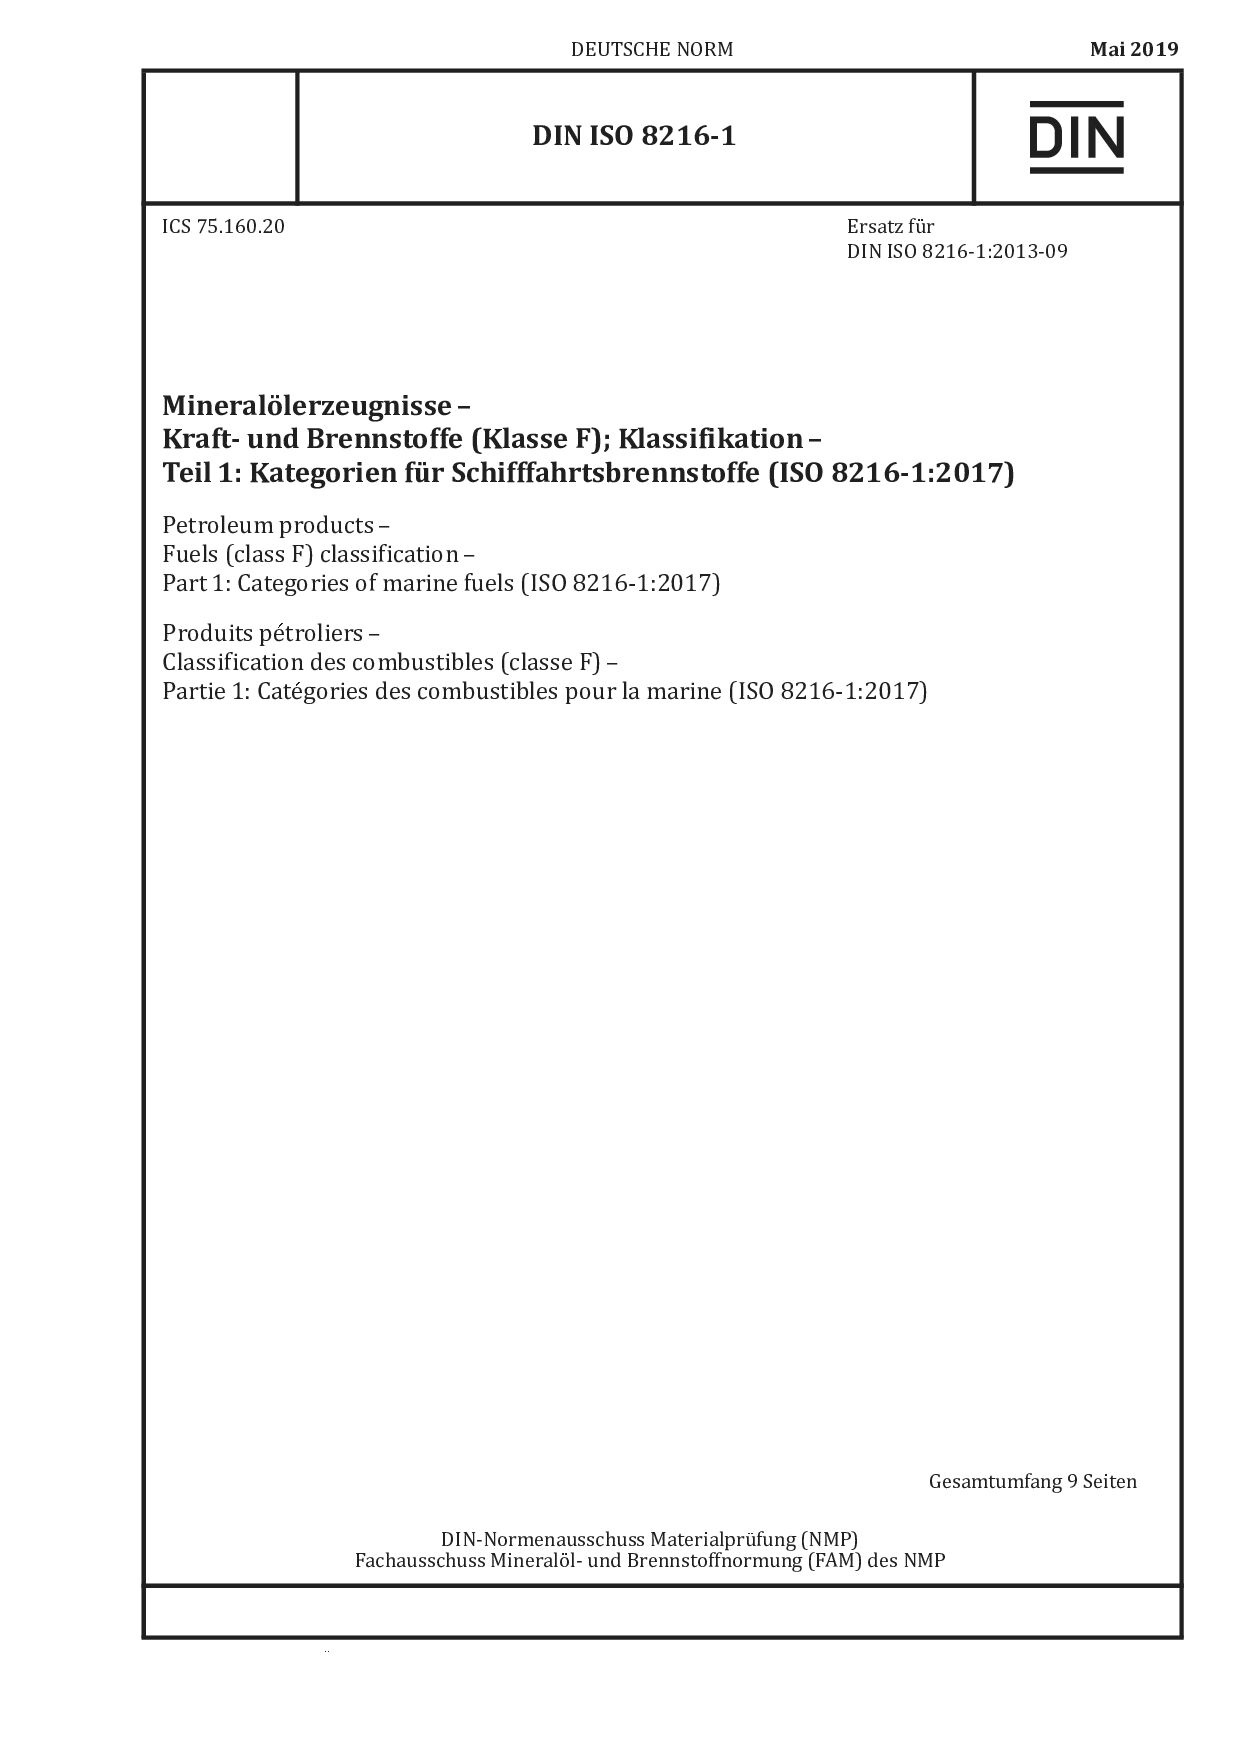 DIN ISO 8216-1:2019-05